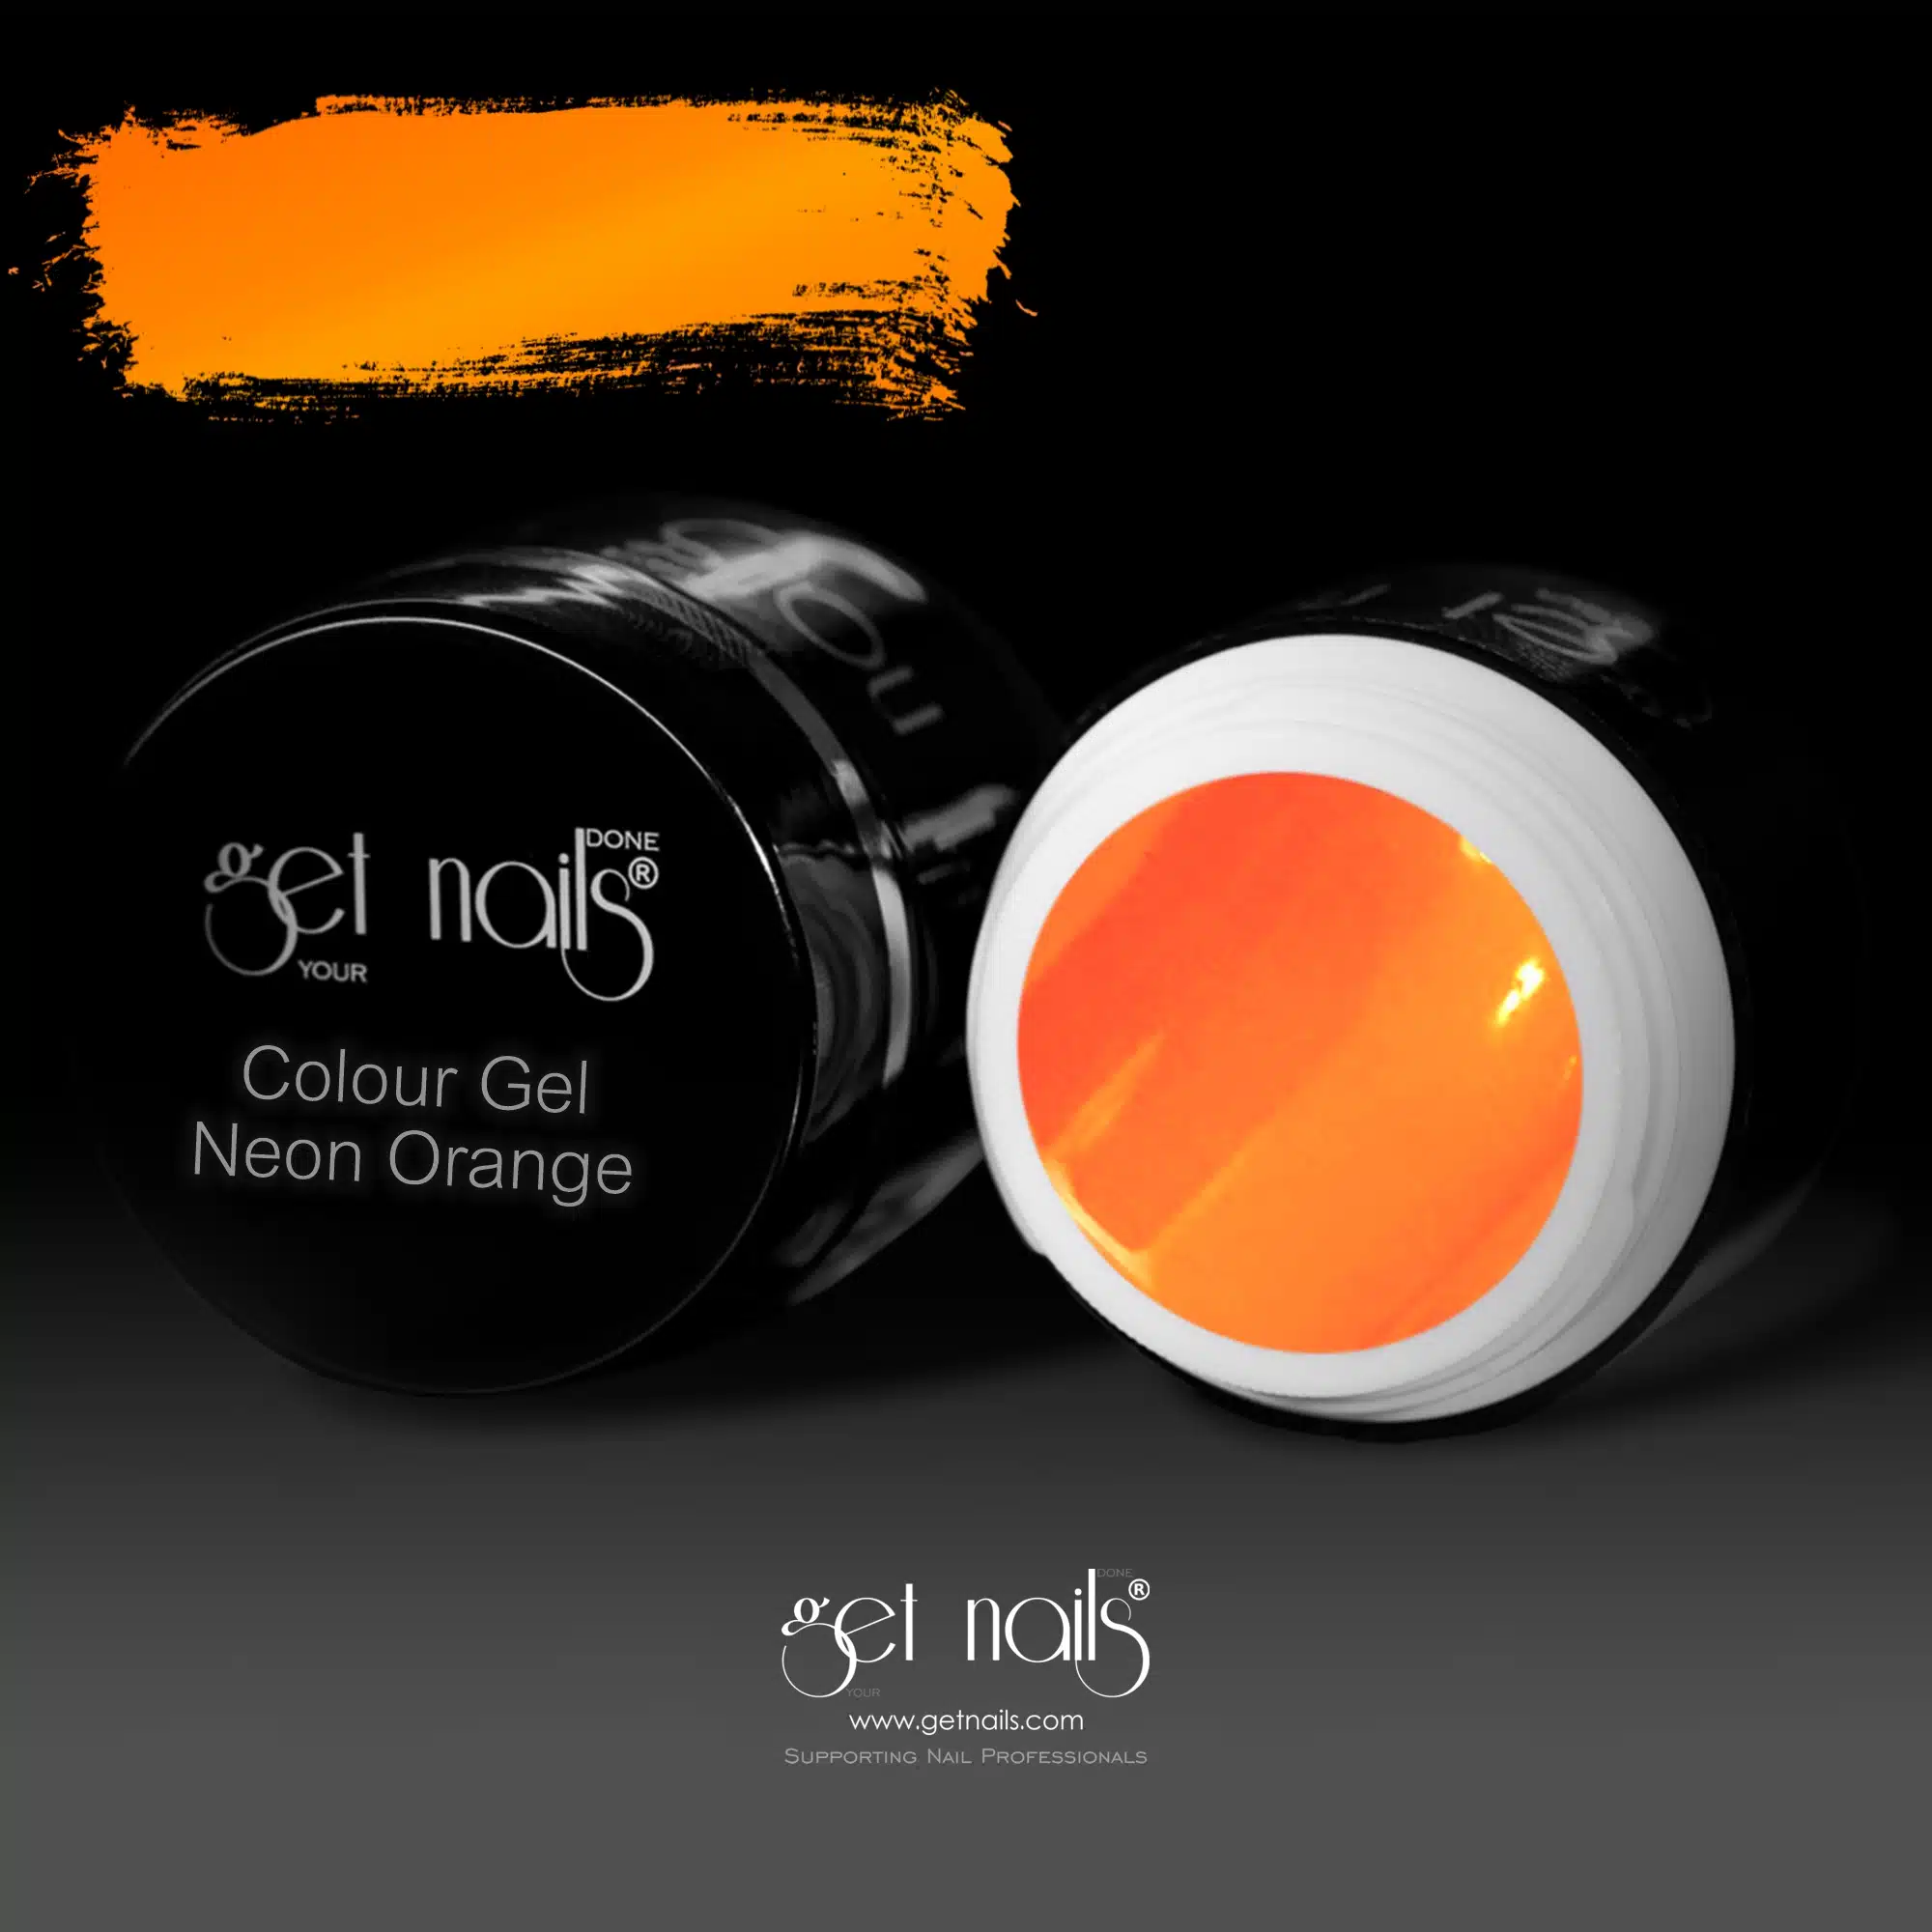 Get Nails Austria - Colour Gel Neon Orange 5g